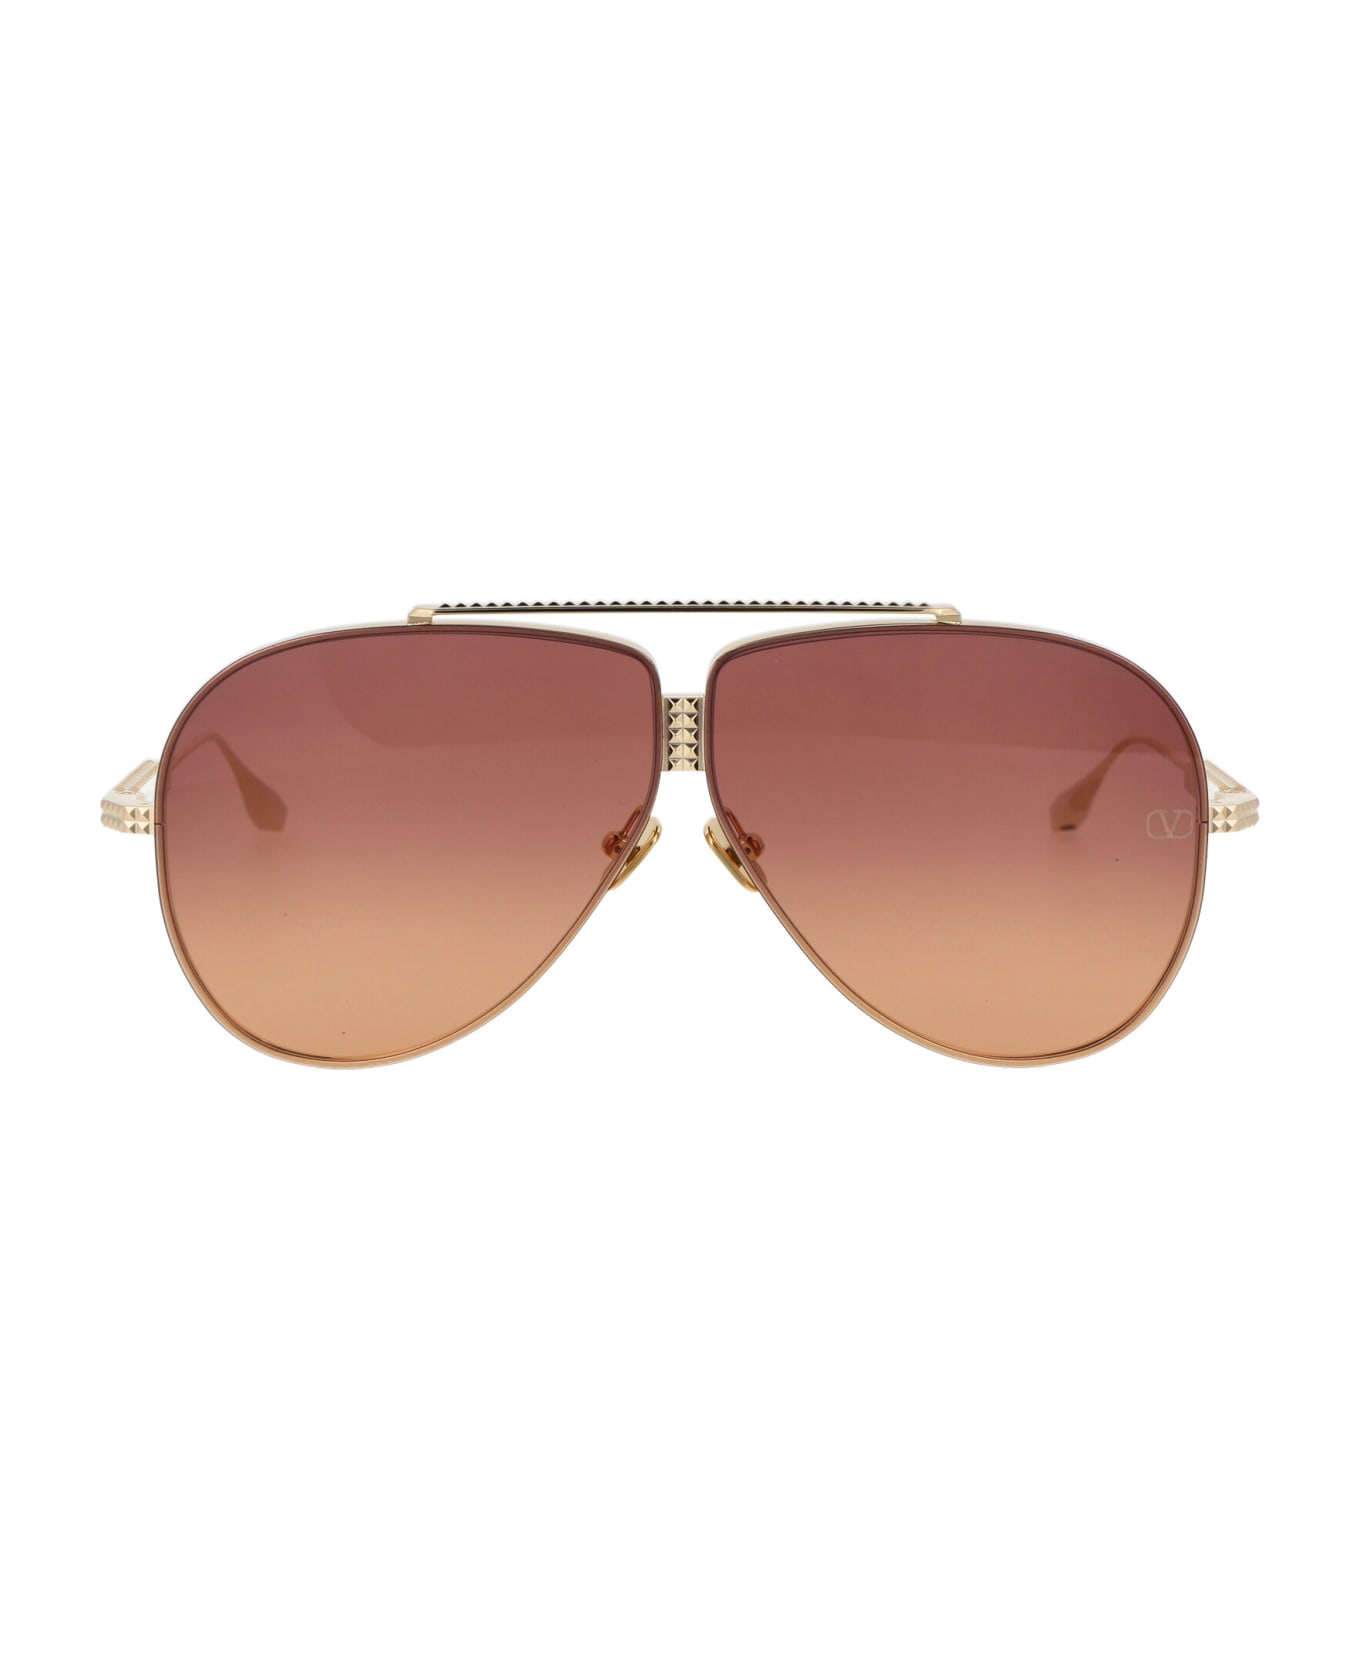 Valentino Eyewear Xvi Sunglasses - LIGHT GOLD W/ VIOLET TO ORANGE